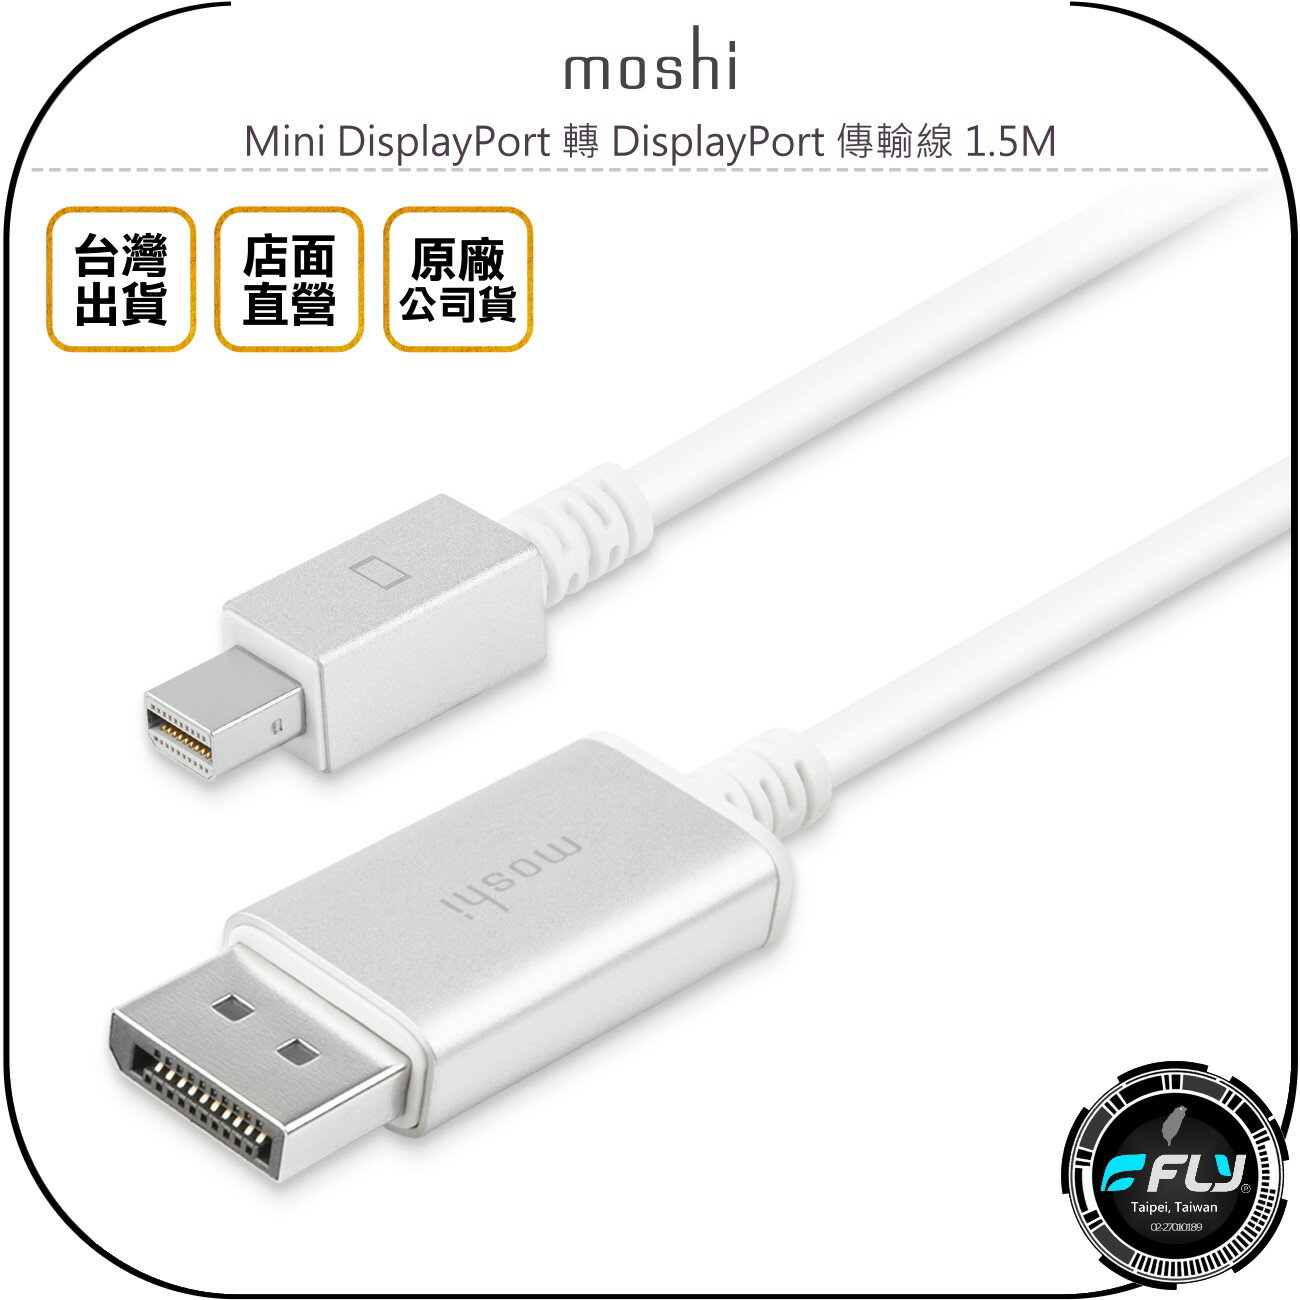 《飛翔無線3C》Moshi Mini DisplayPort 轉 DisplayPort 傳輸線 1.5M◉公司貨